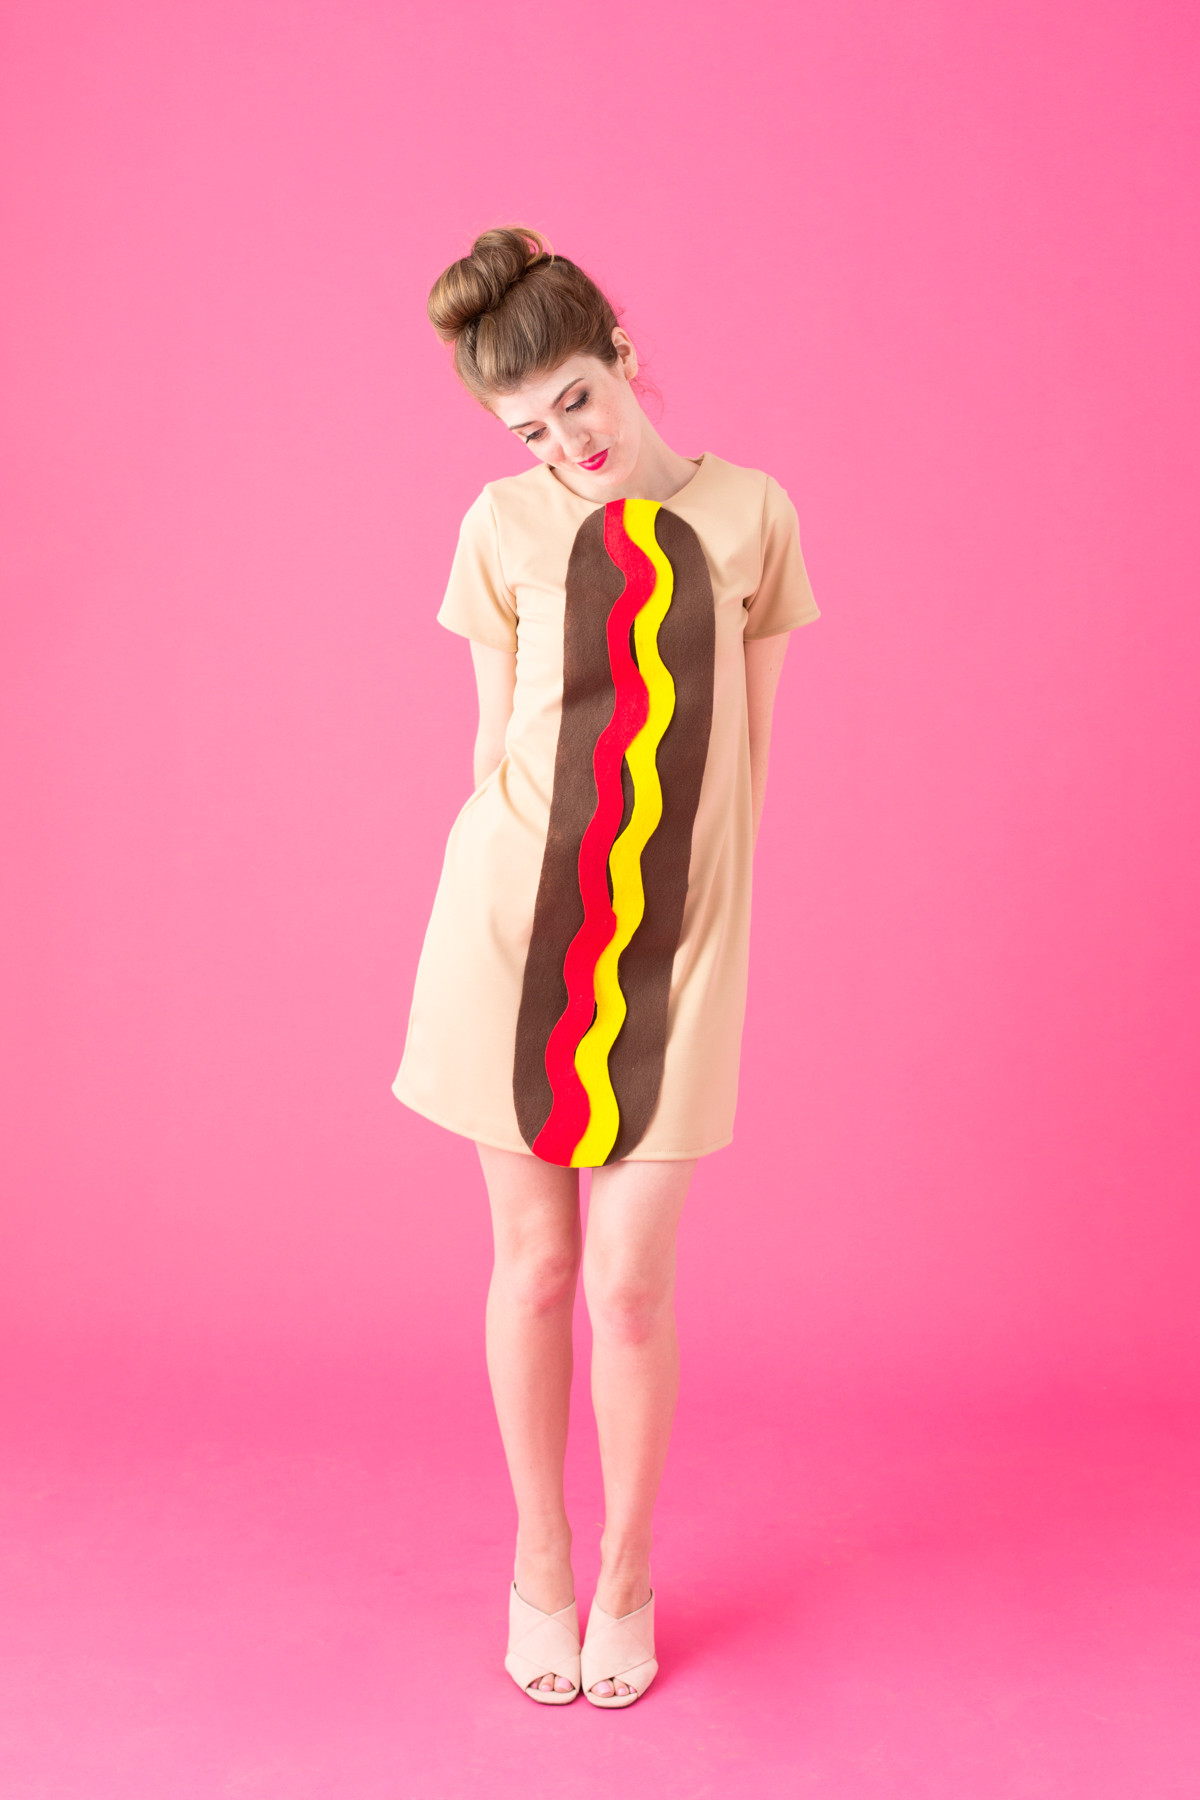 DIY Hot Dog Costume
 DIY Hot Dog Costume Last Chance for FREE Shipping